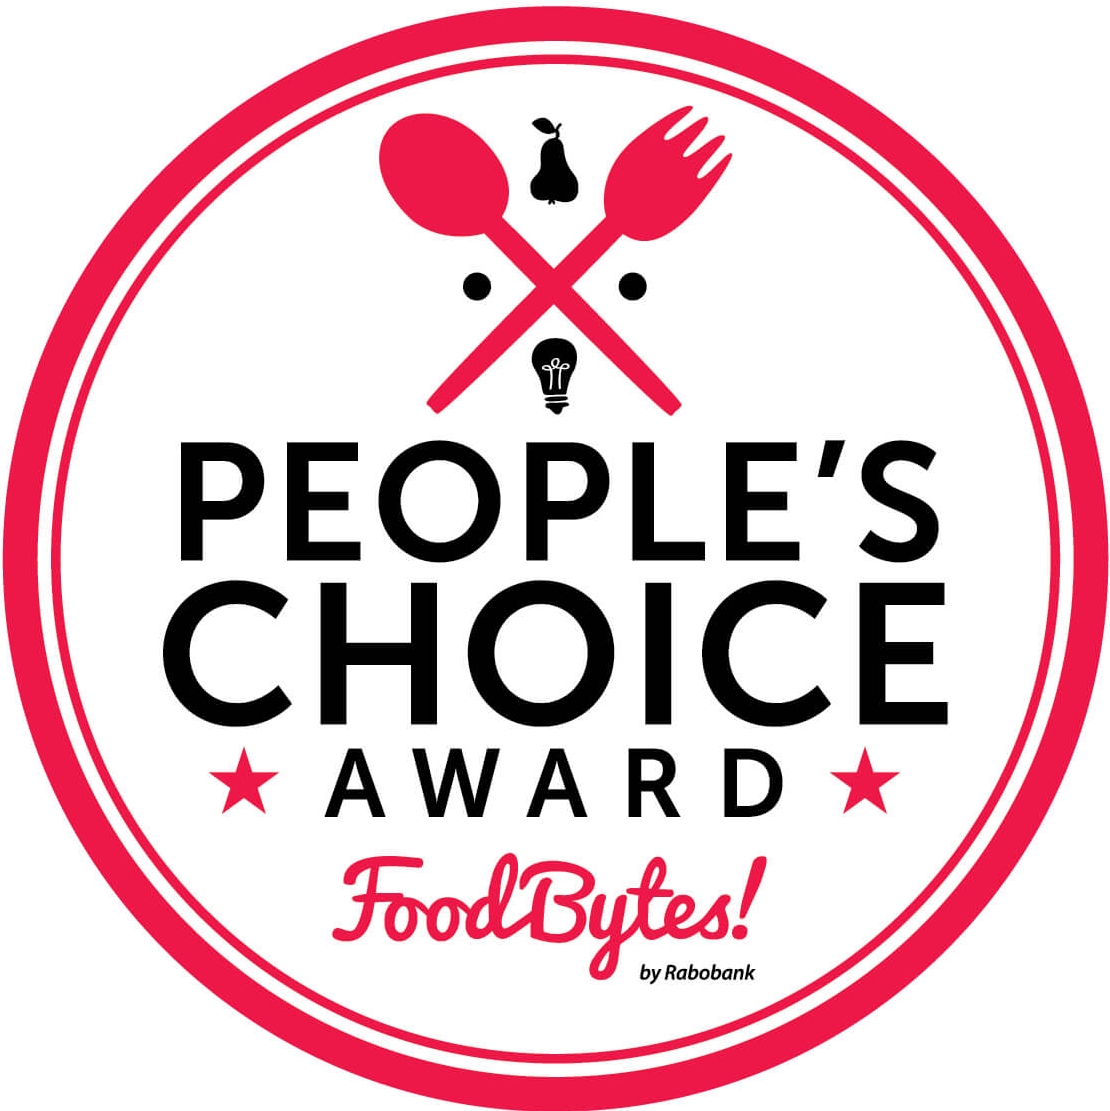 FoodBytes! People's Choice Award